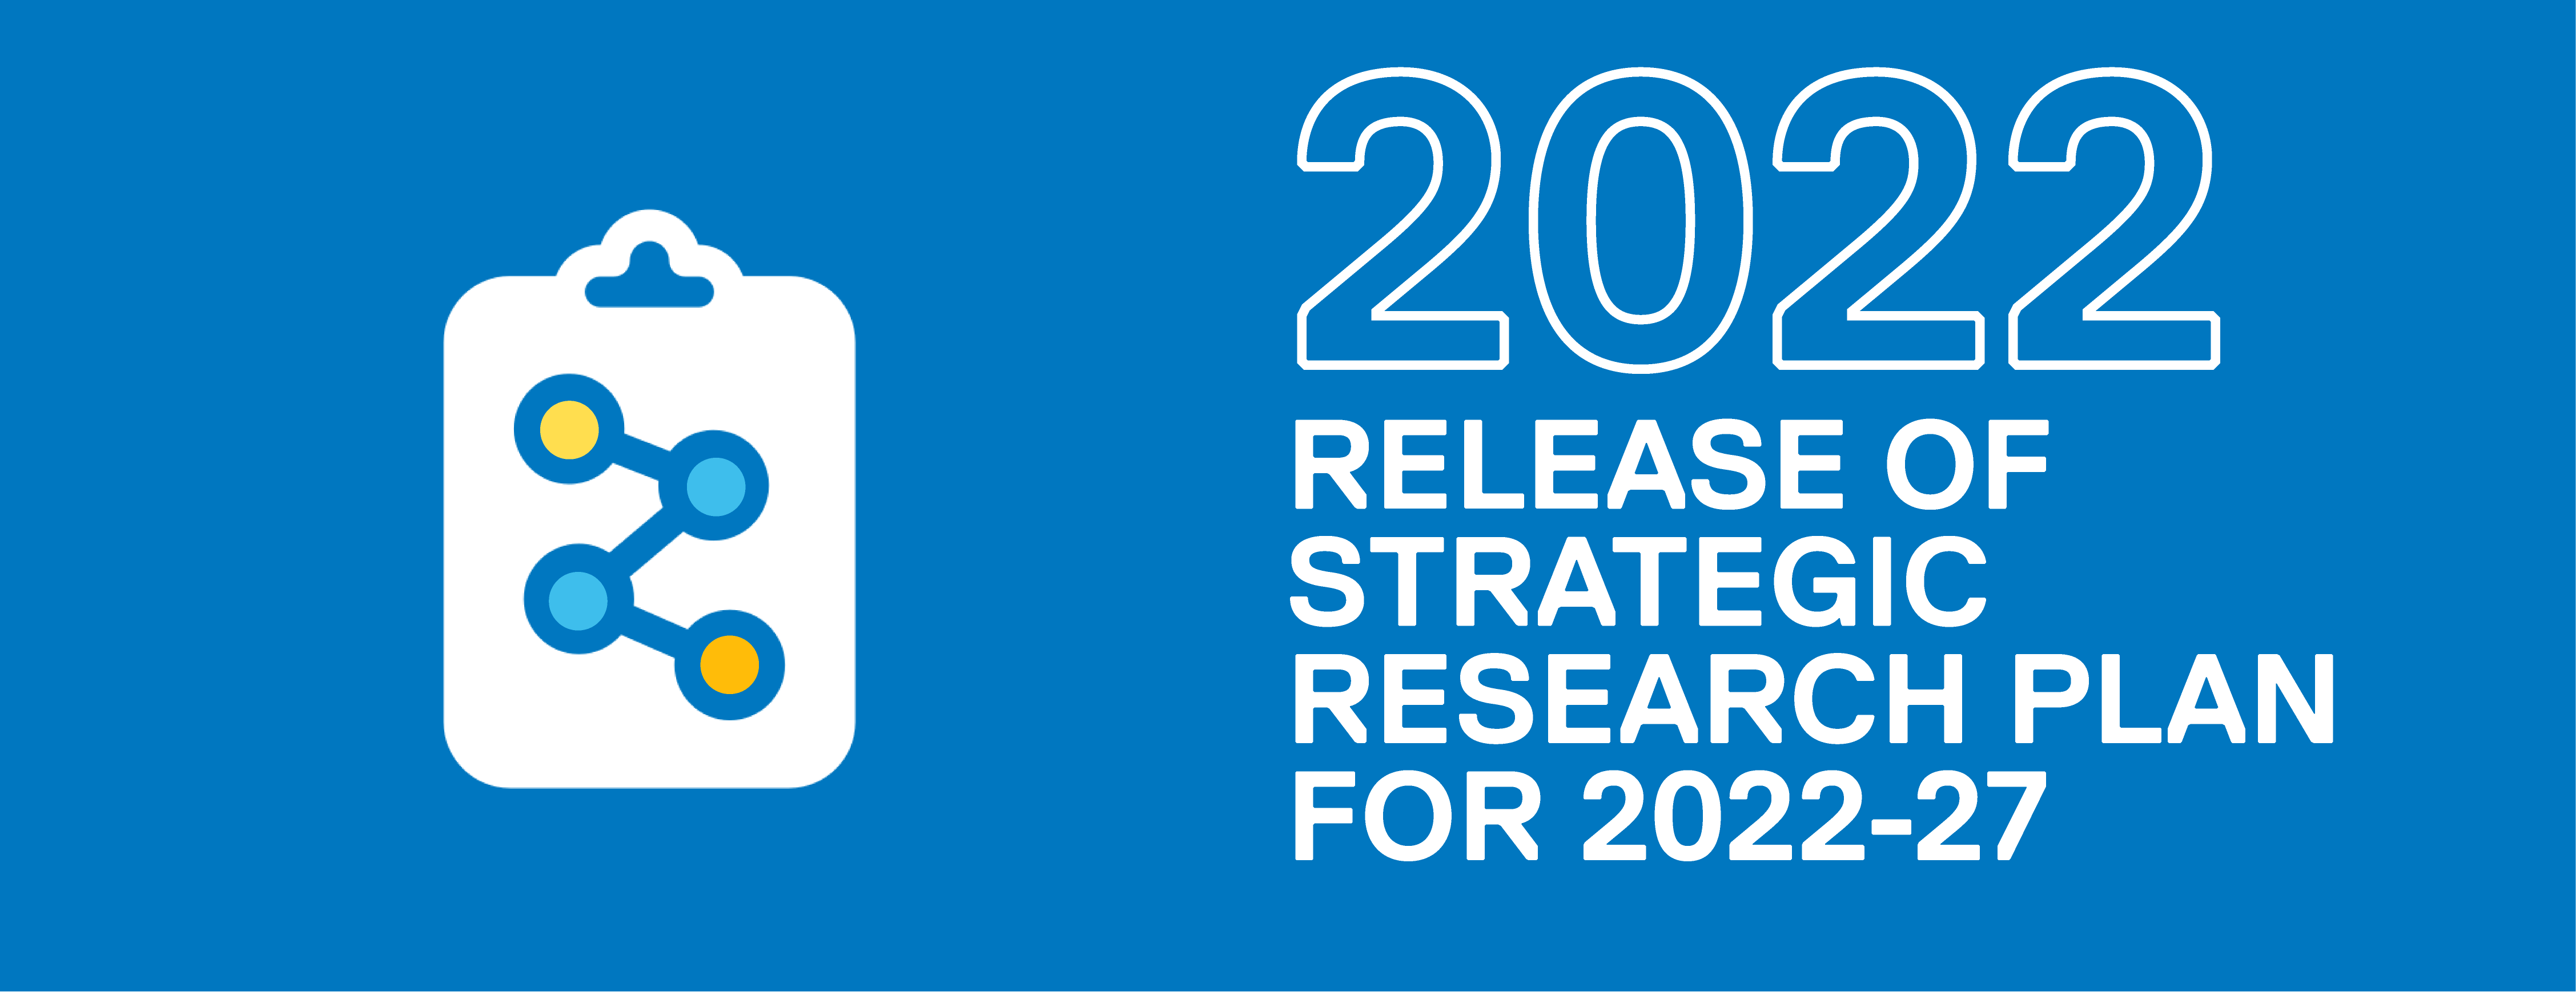 two thousand twenty-two release of strategic research plan for two thousand twenty-two to twenty-seven